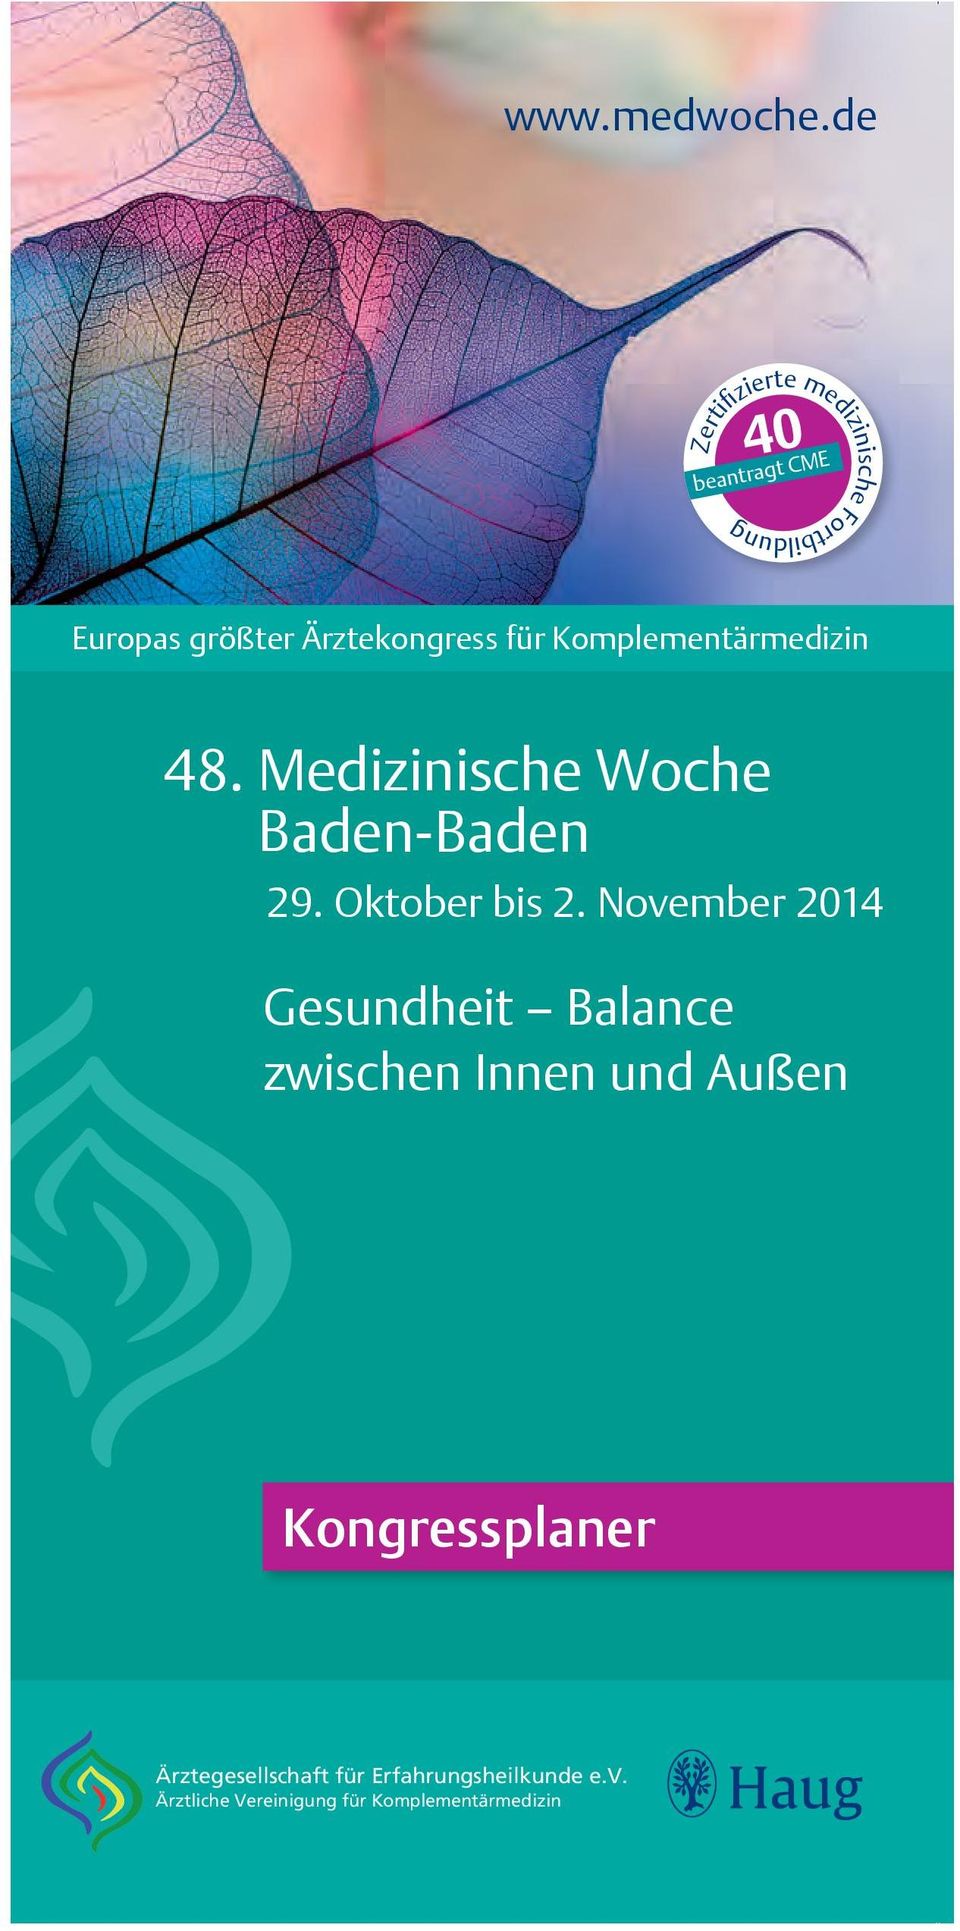 Ärztekongress für Komplementärmedizin 48. Medizinische Woche Baden-Baden 29.